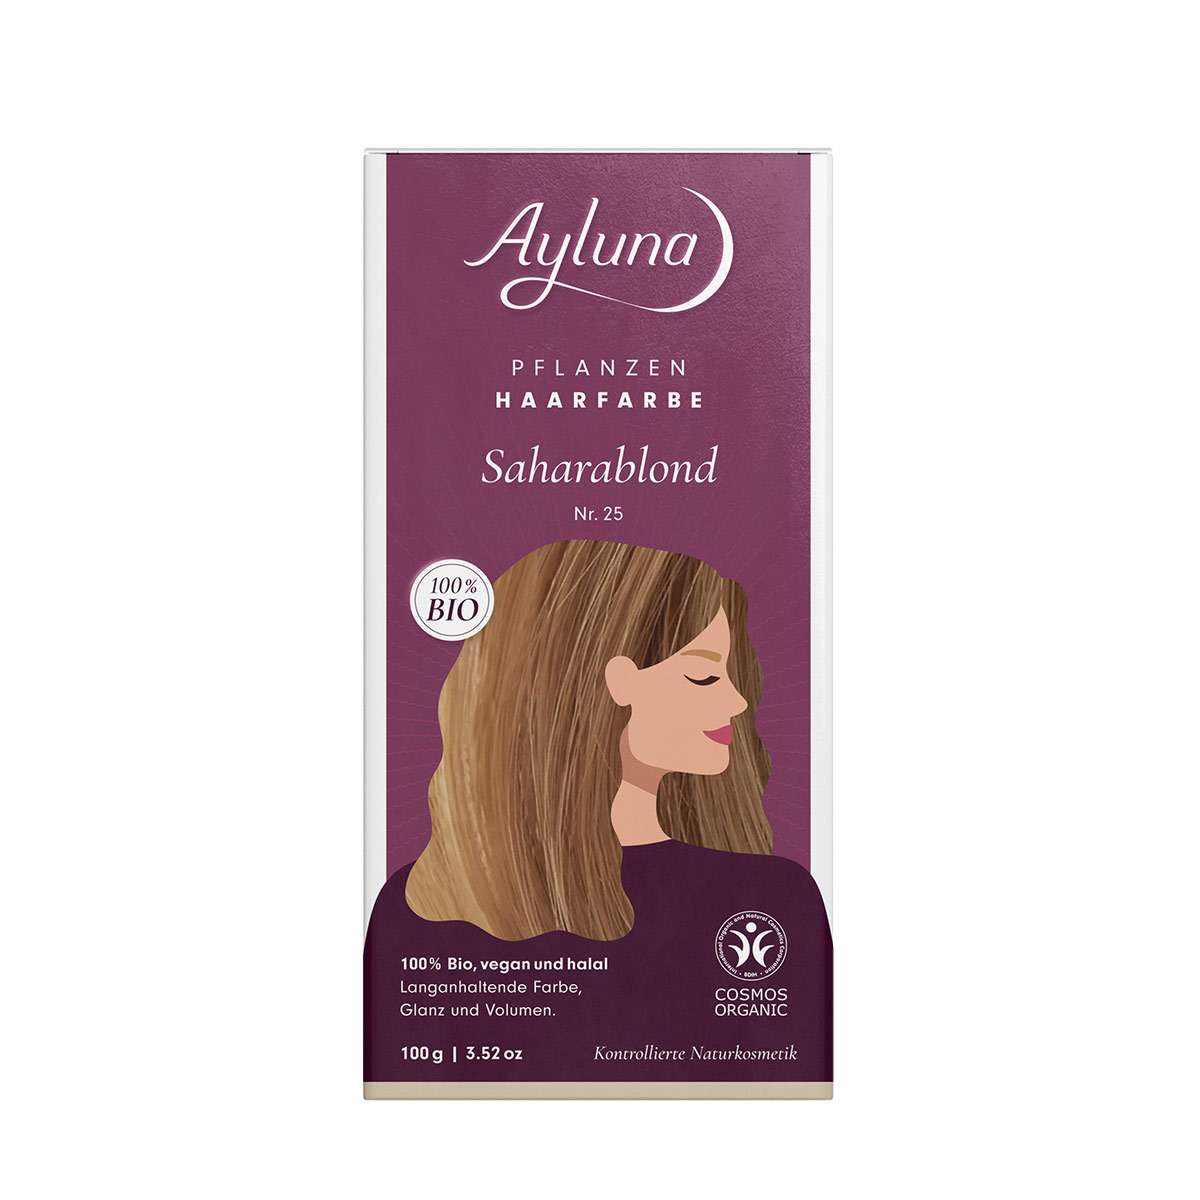 Ayluna Haarfarbe Saharablond - Haarfärbemittel ohne Ammoniak